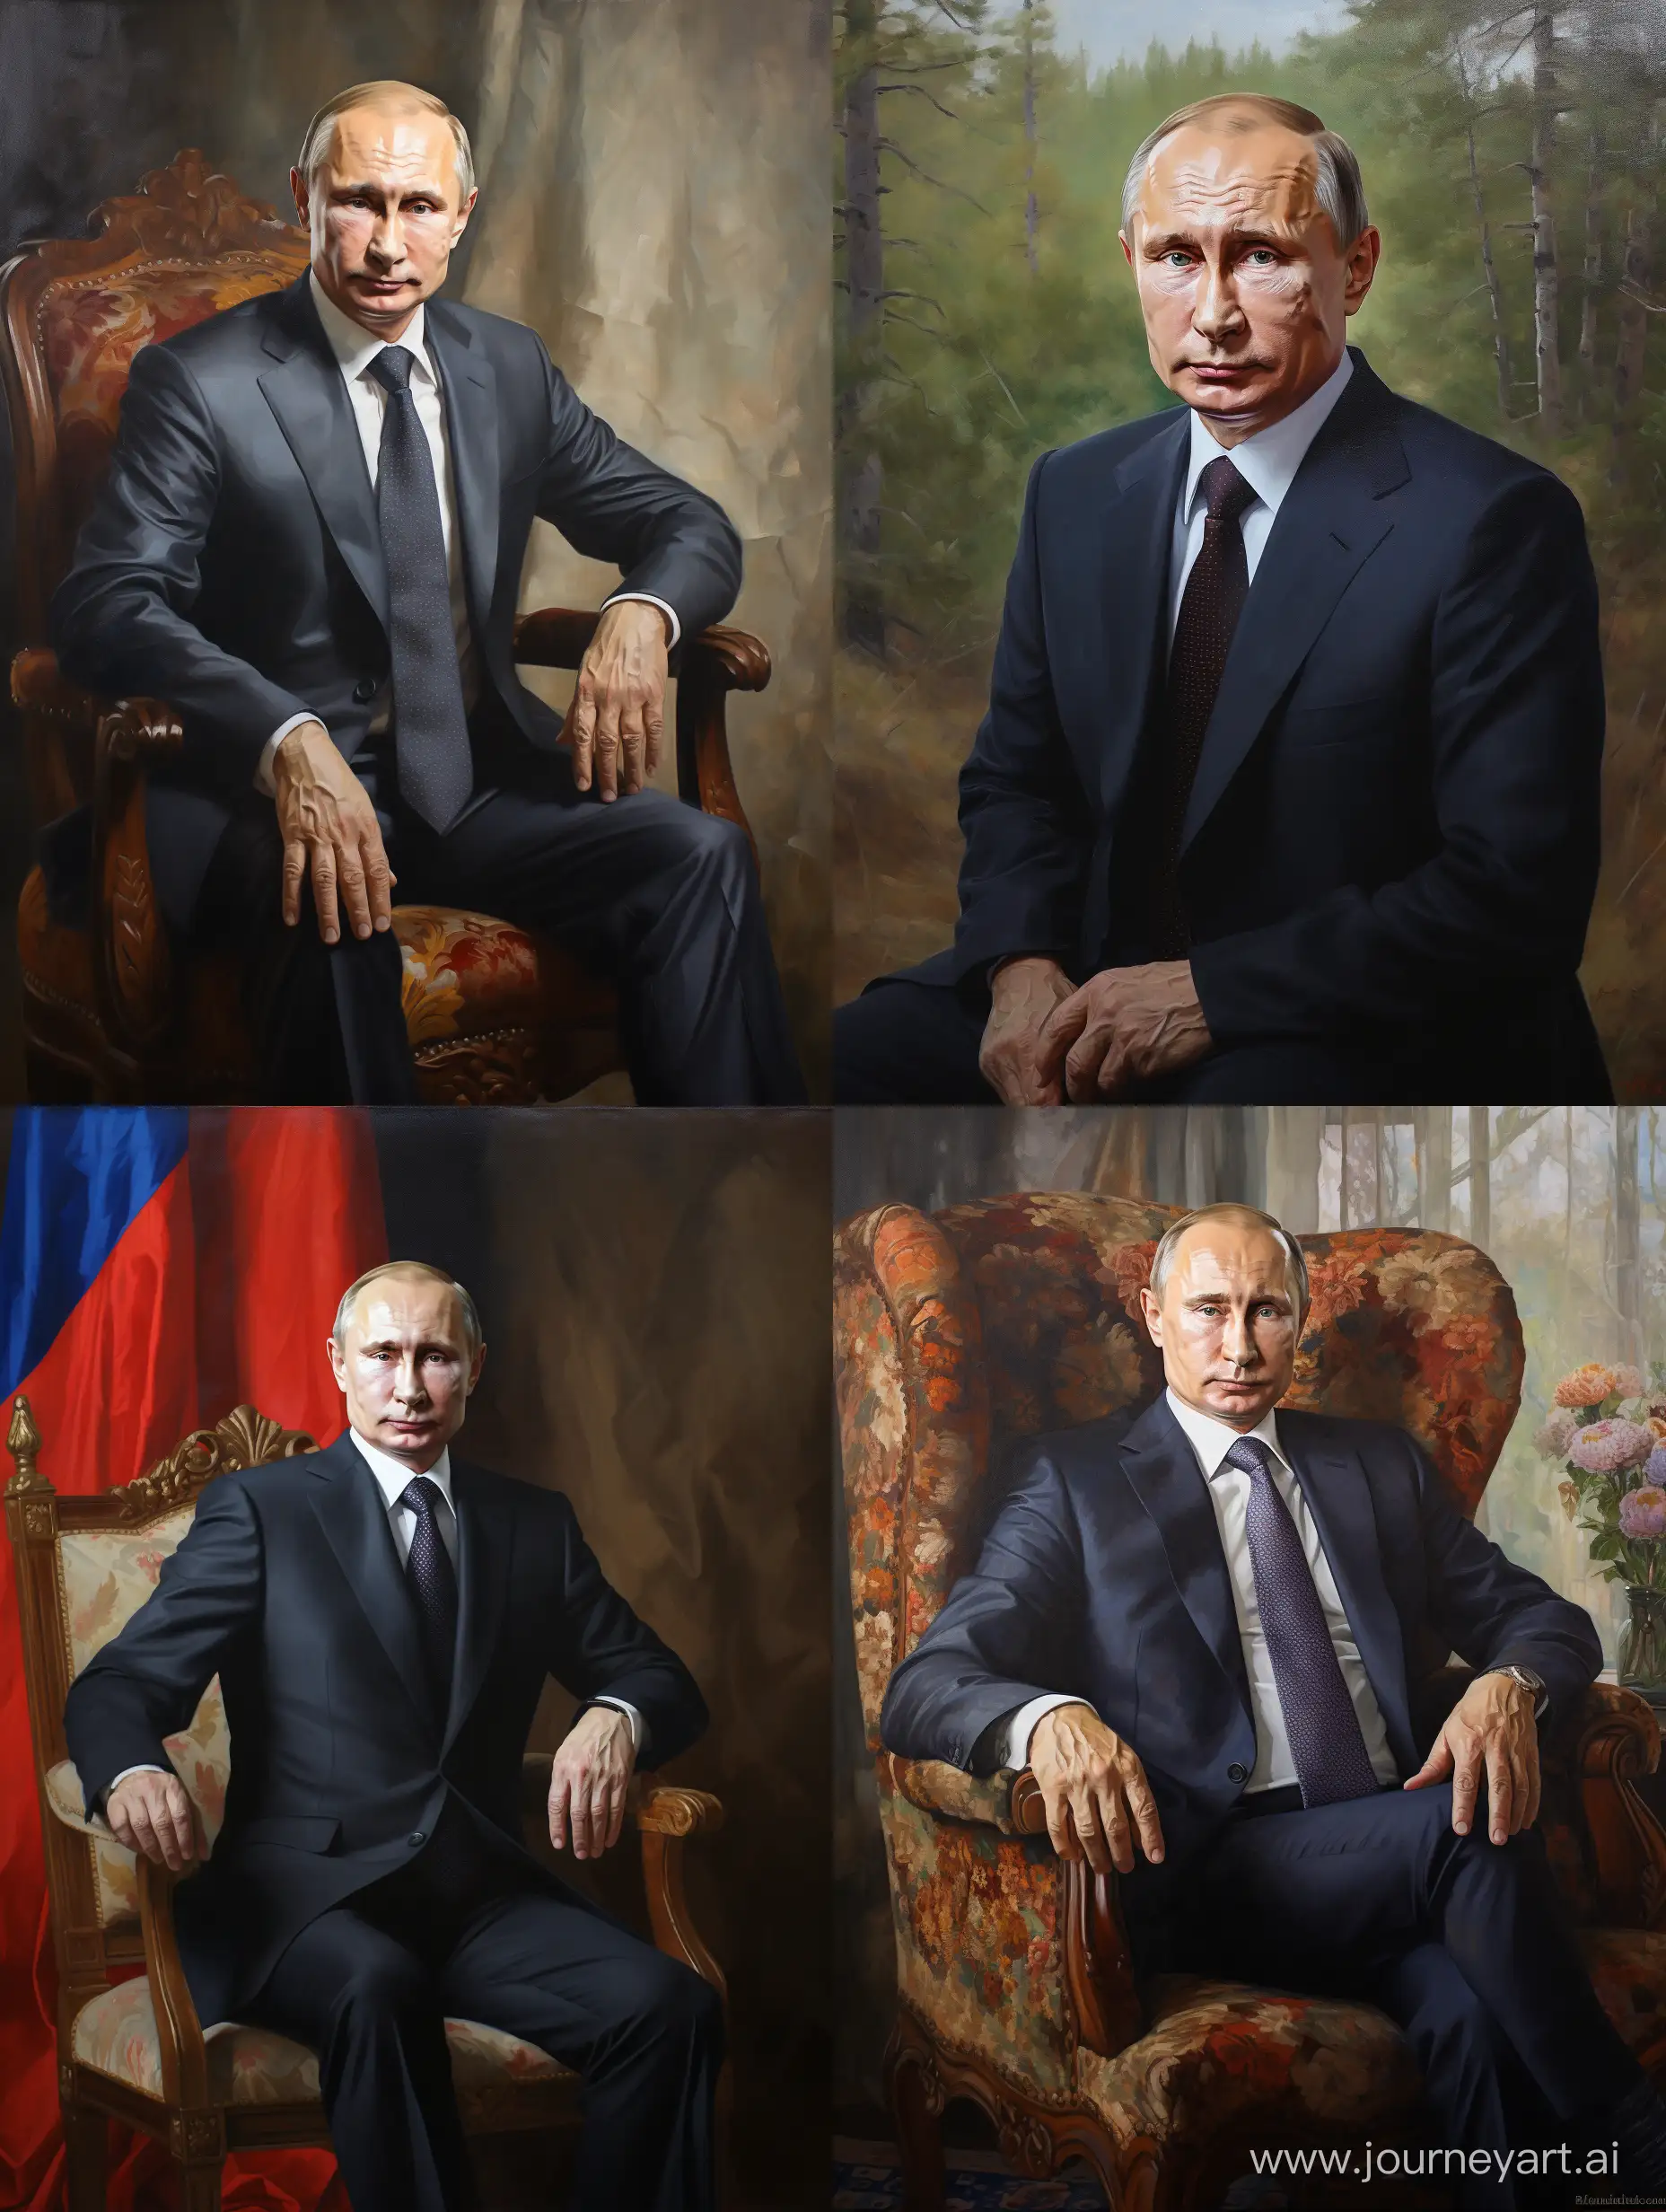 Vladimir-Putin-Presidential-Portrait-in-Oil-Paints